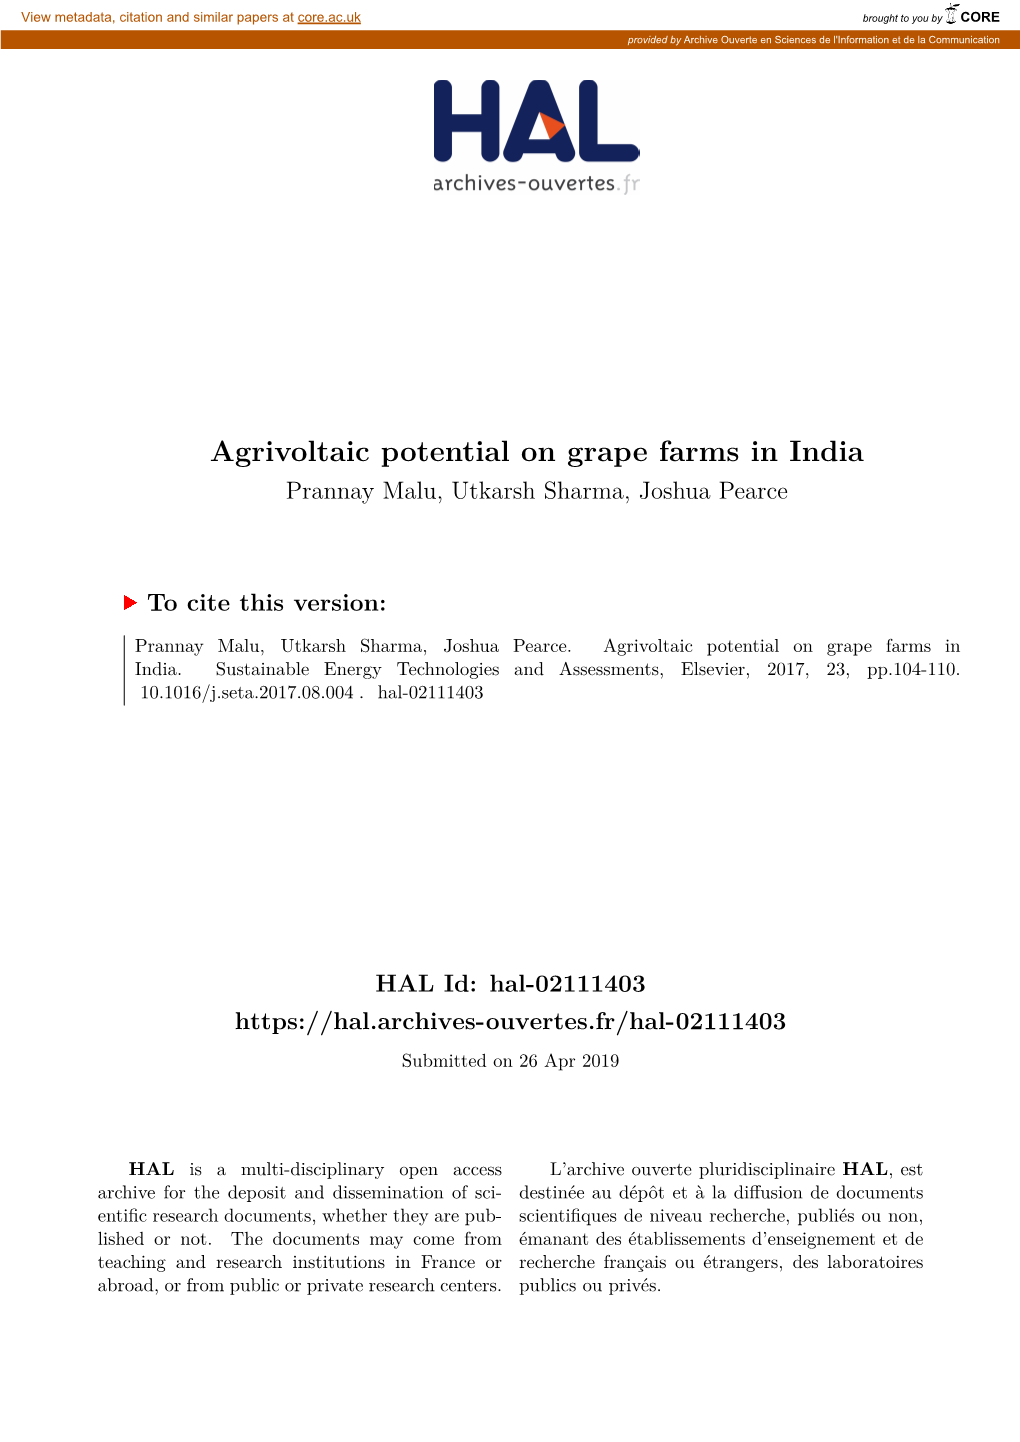 Agrivoltaic Potential on Grape Farms in India Prannay Malu, Utkarsh Sharma, Joshua Pearce